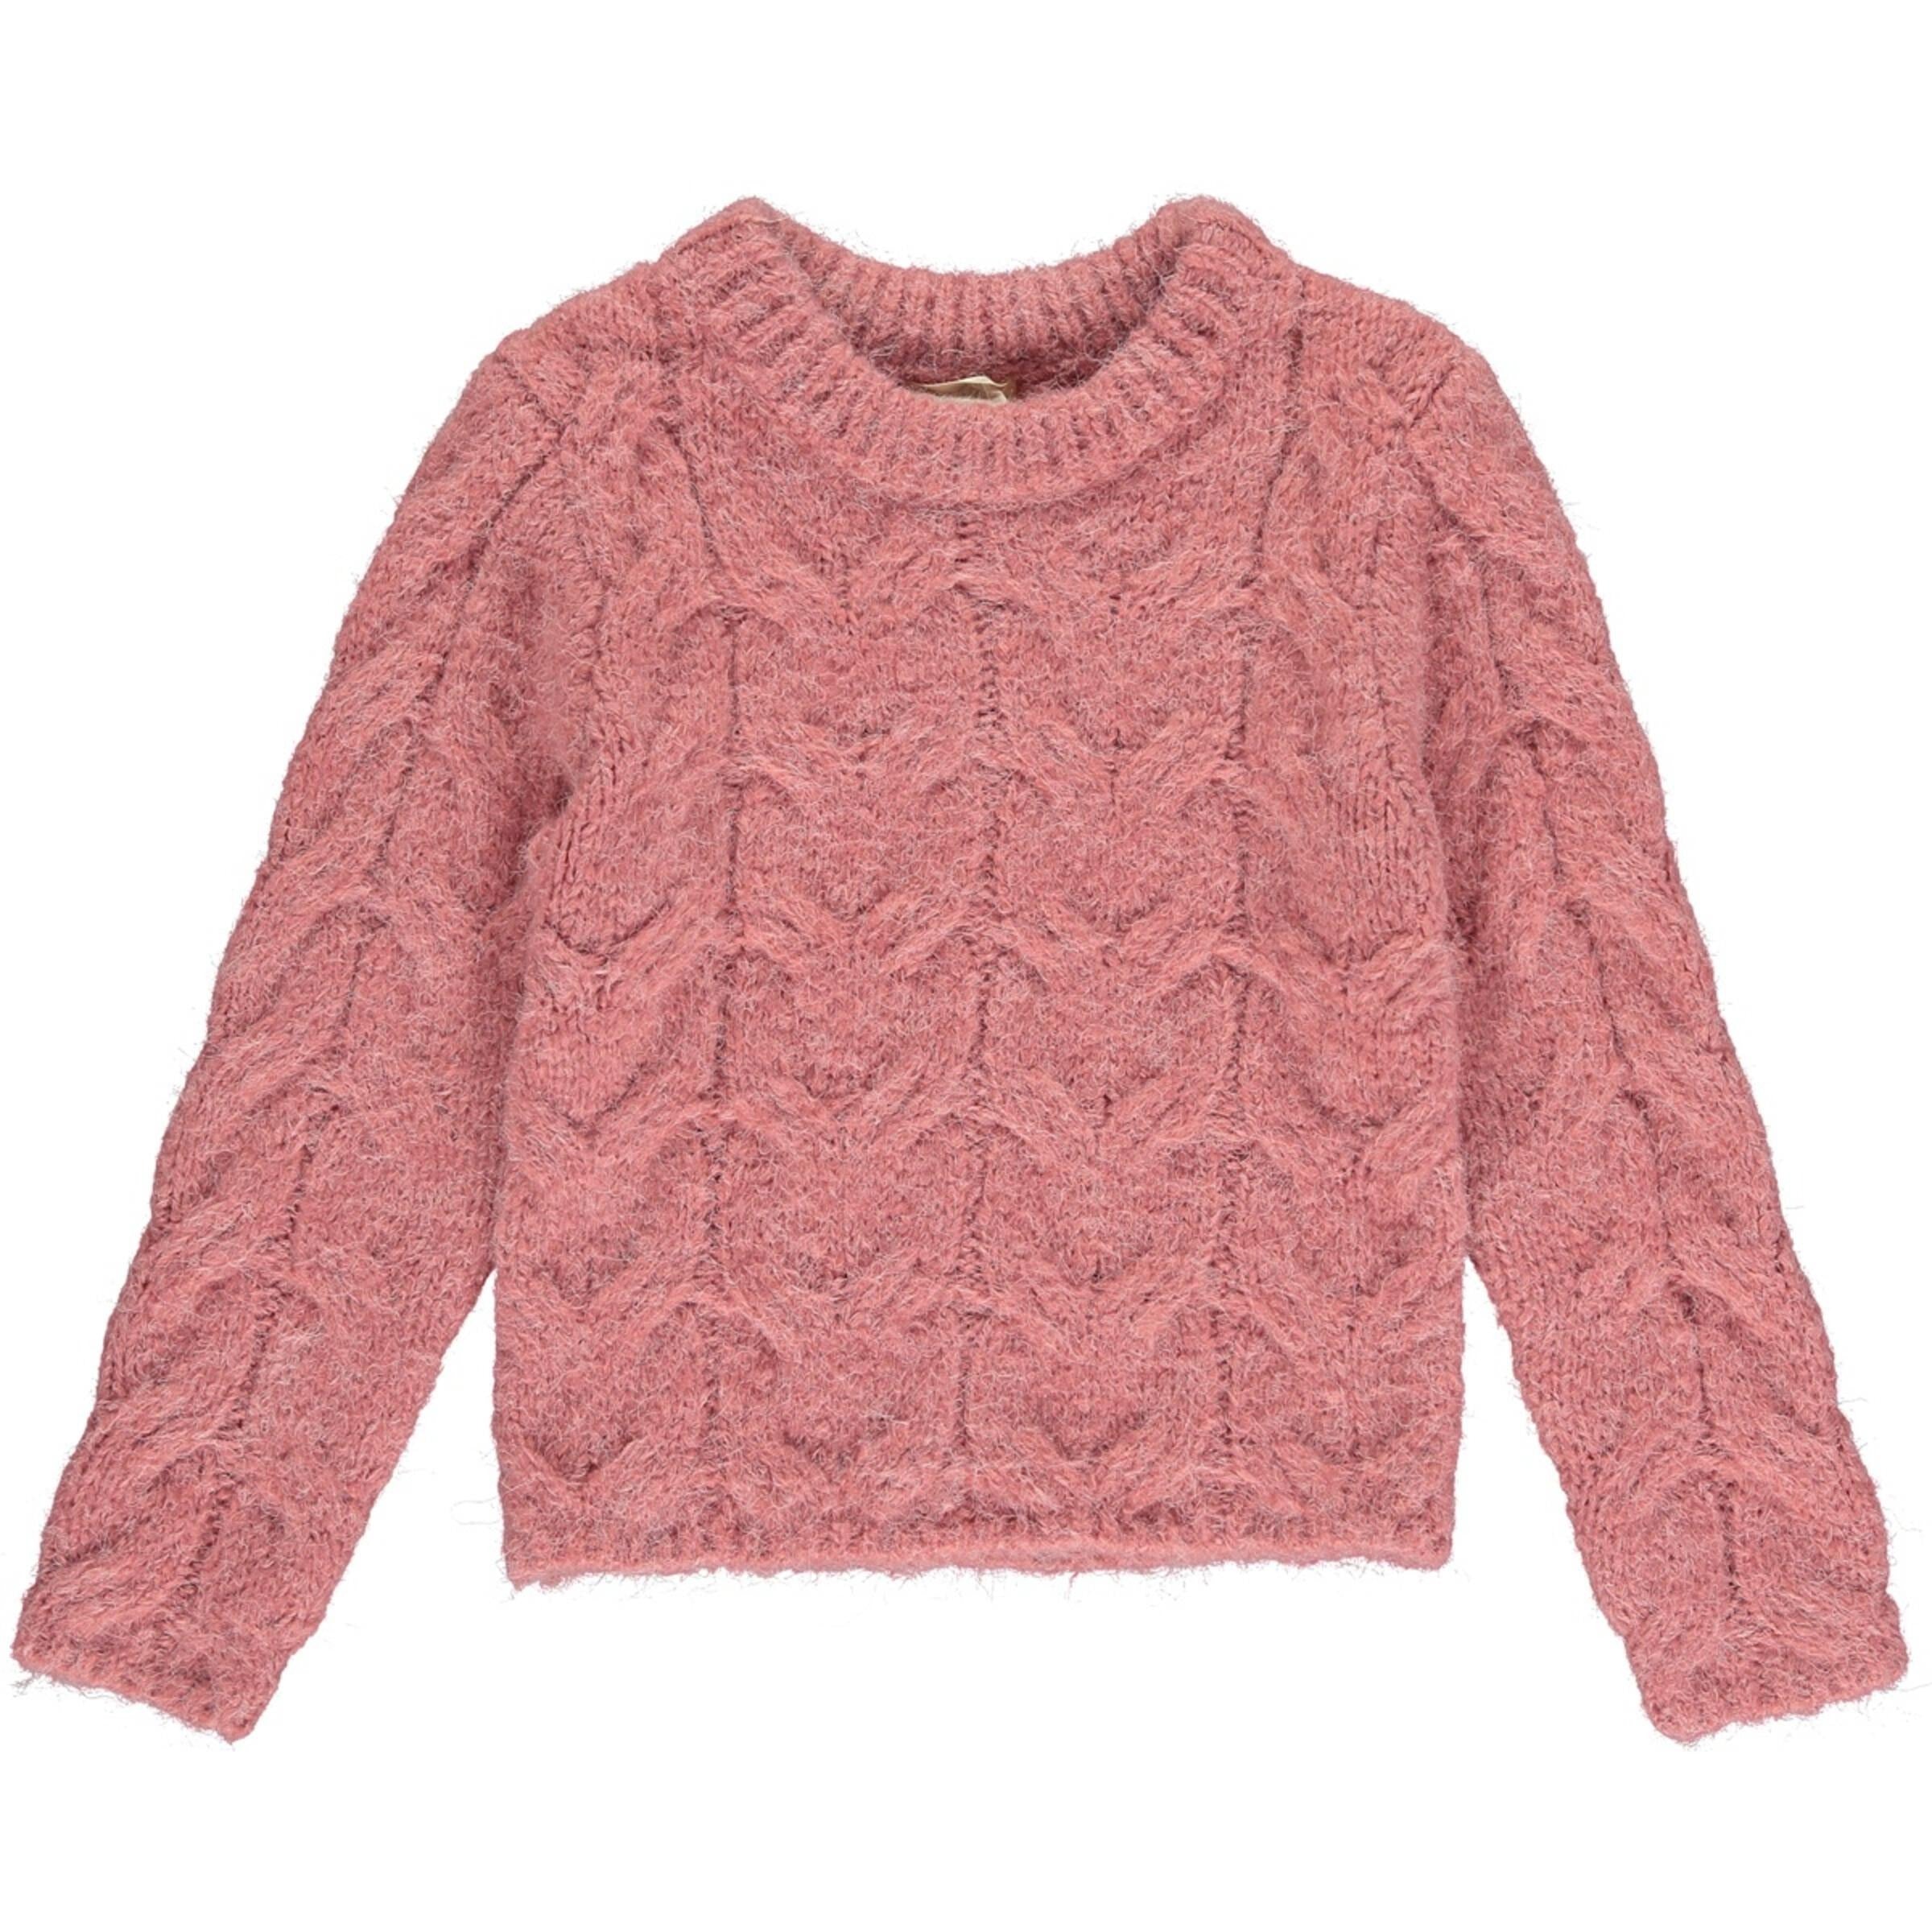 Gracie Sweater - Pink